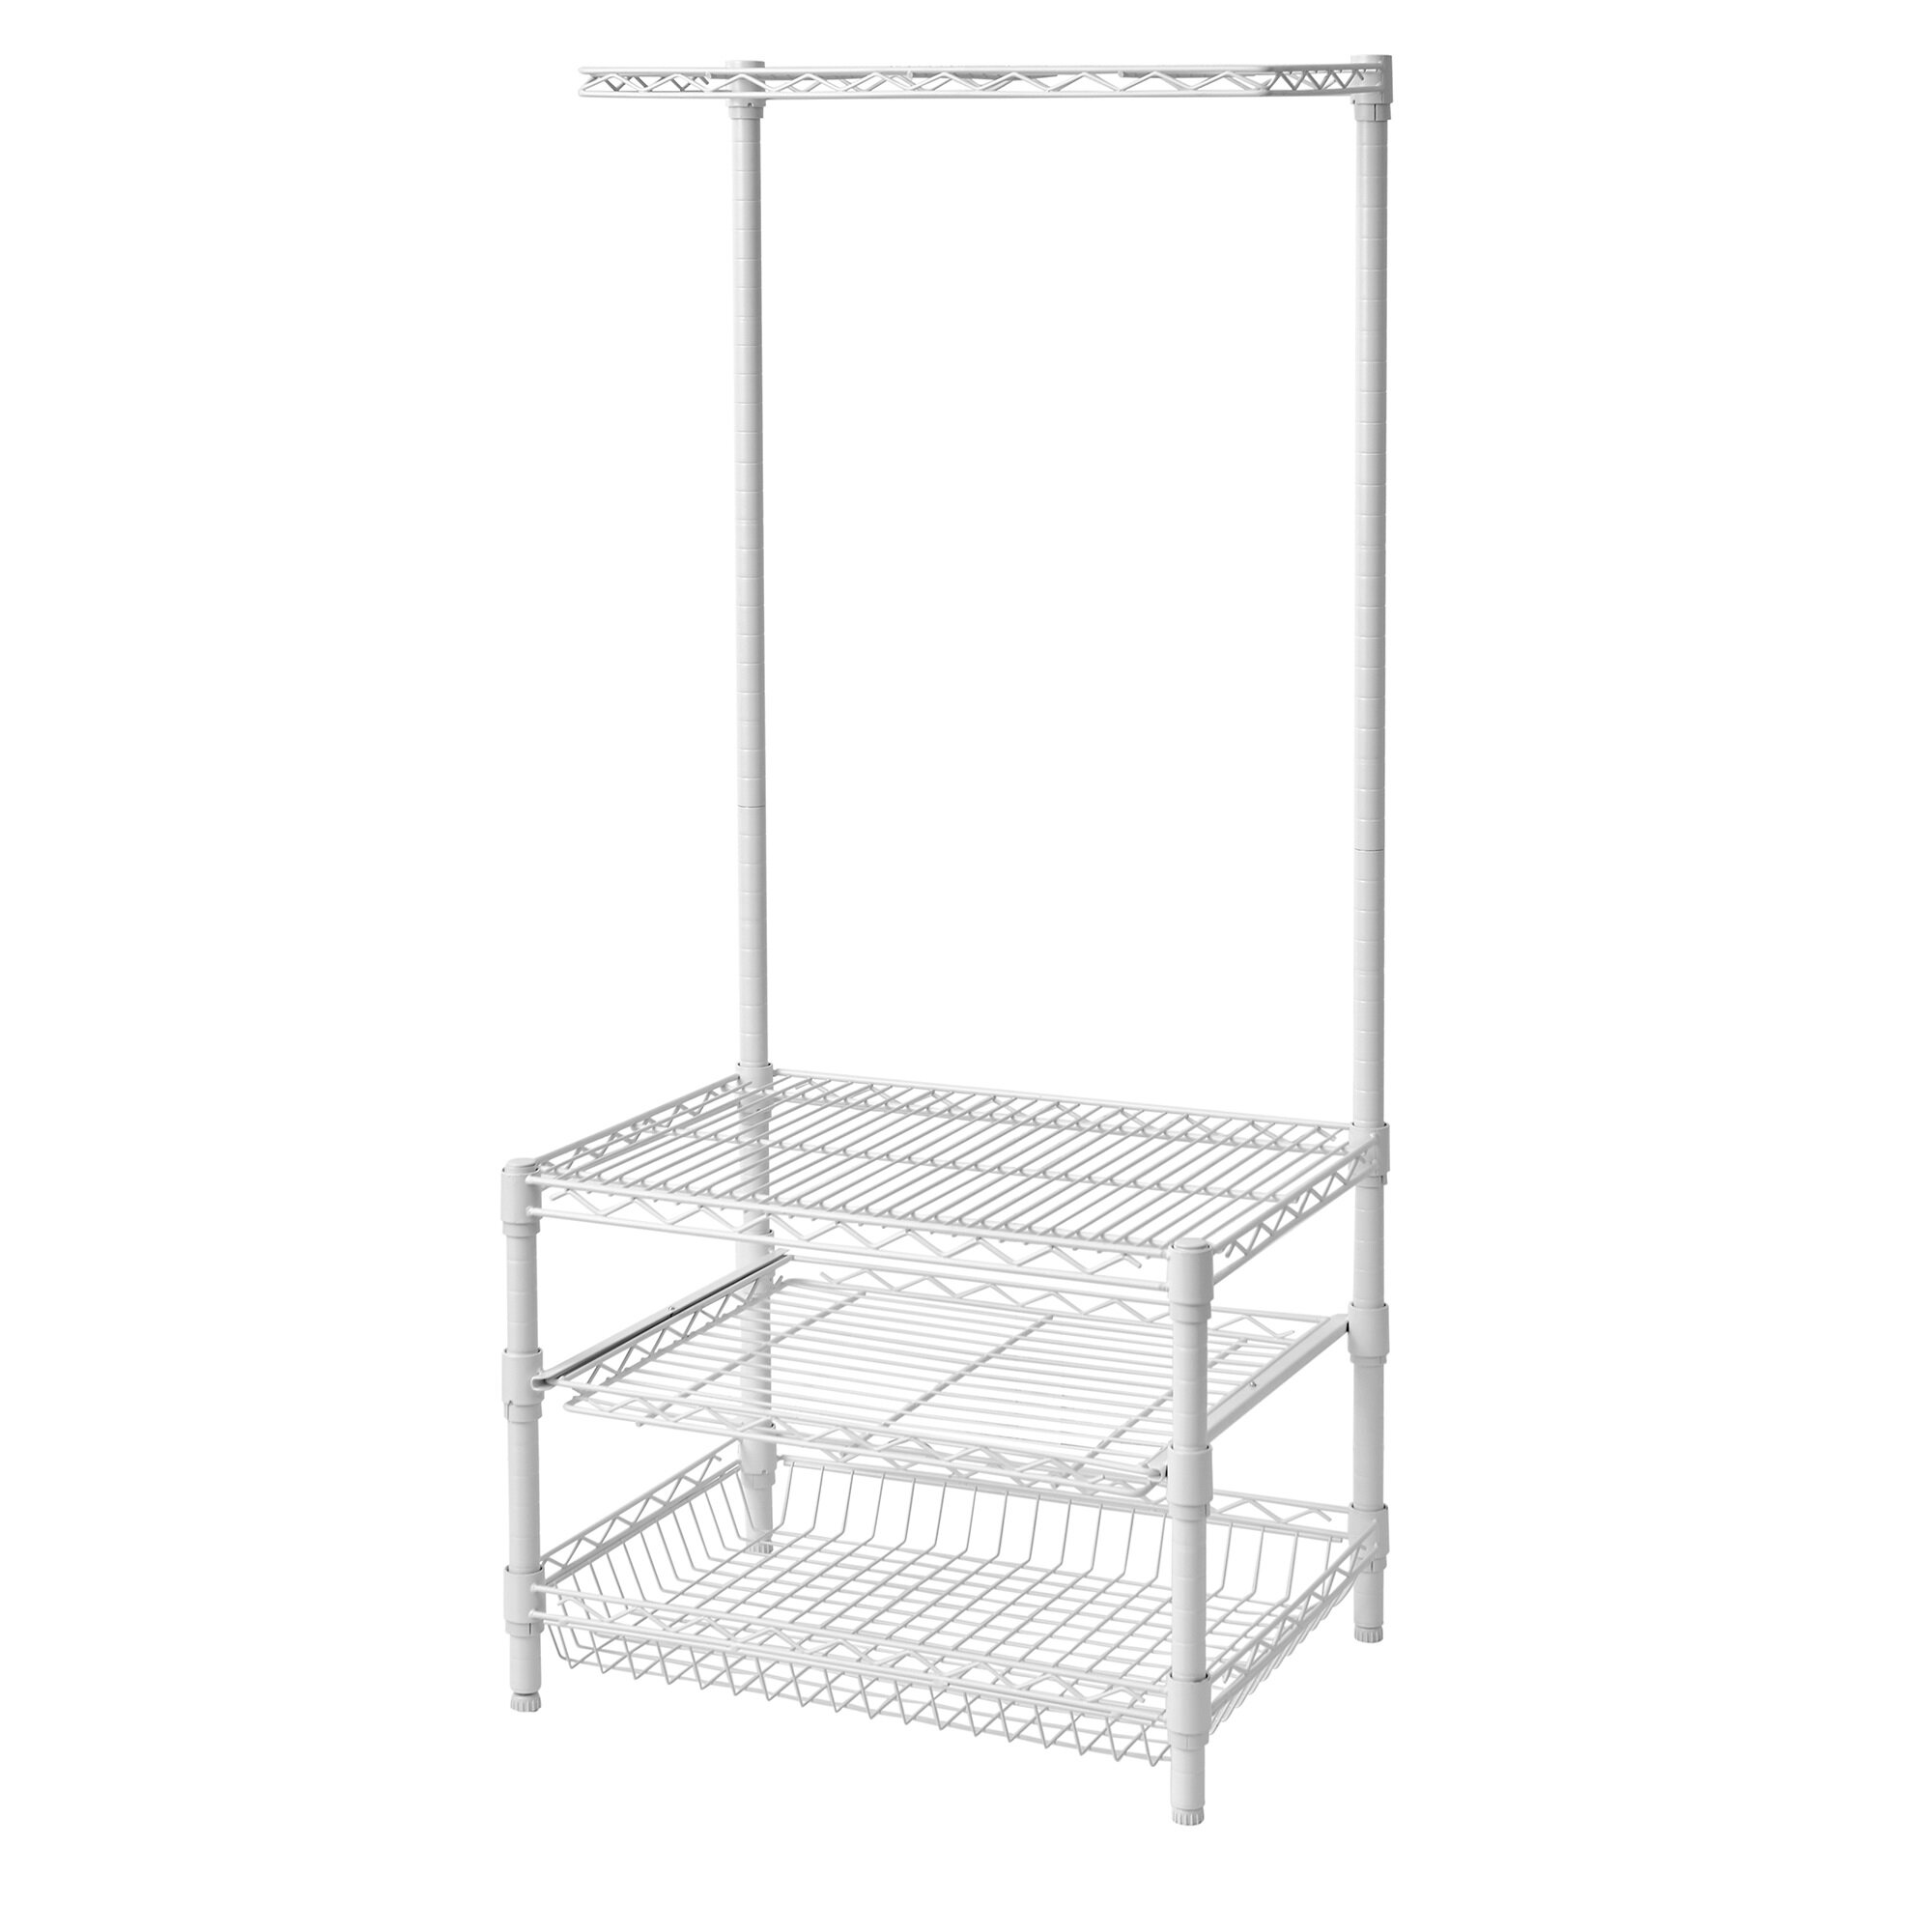 Suprima® Mini-Fridge Organizer Shelves - Gunmetal Gray